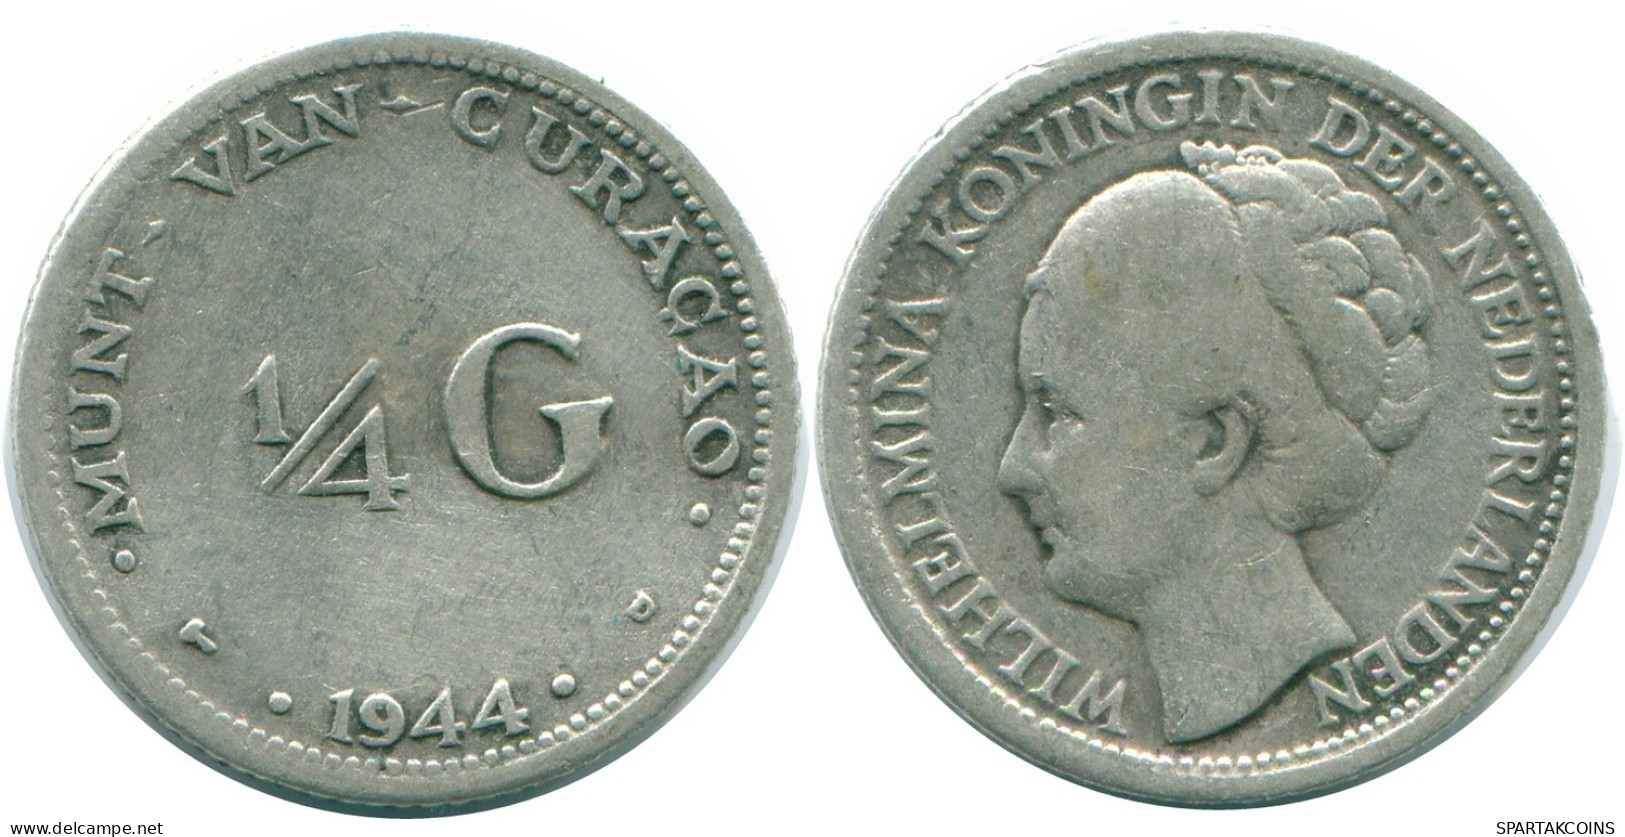 1/4 GULDEN 1944 CURACAO Netherlands SILVER Colonial Coin #NL10659.4.U - Curaçao